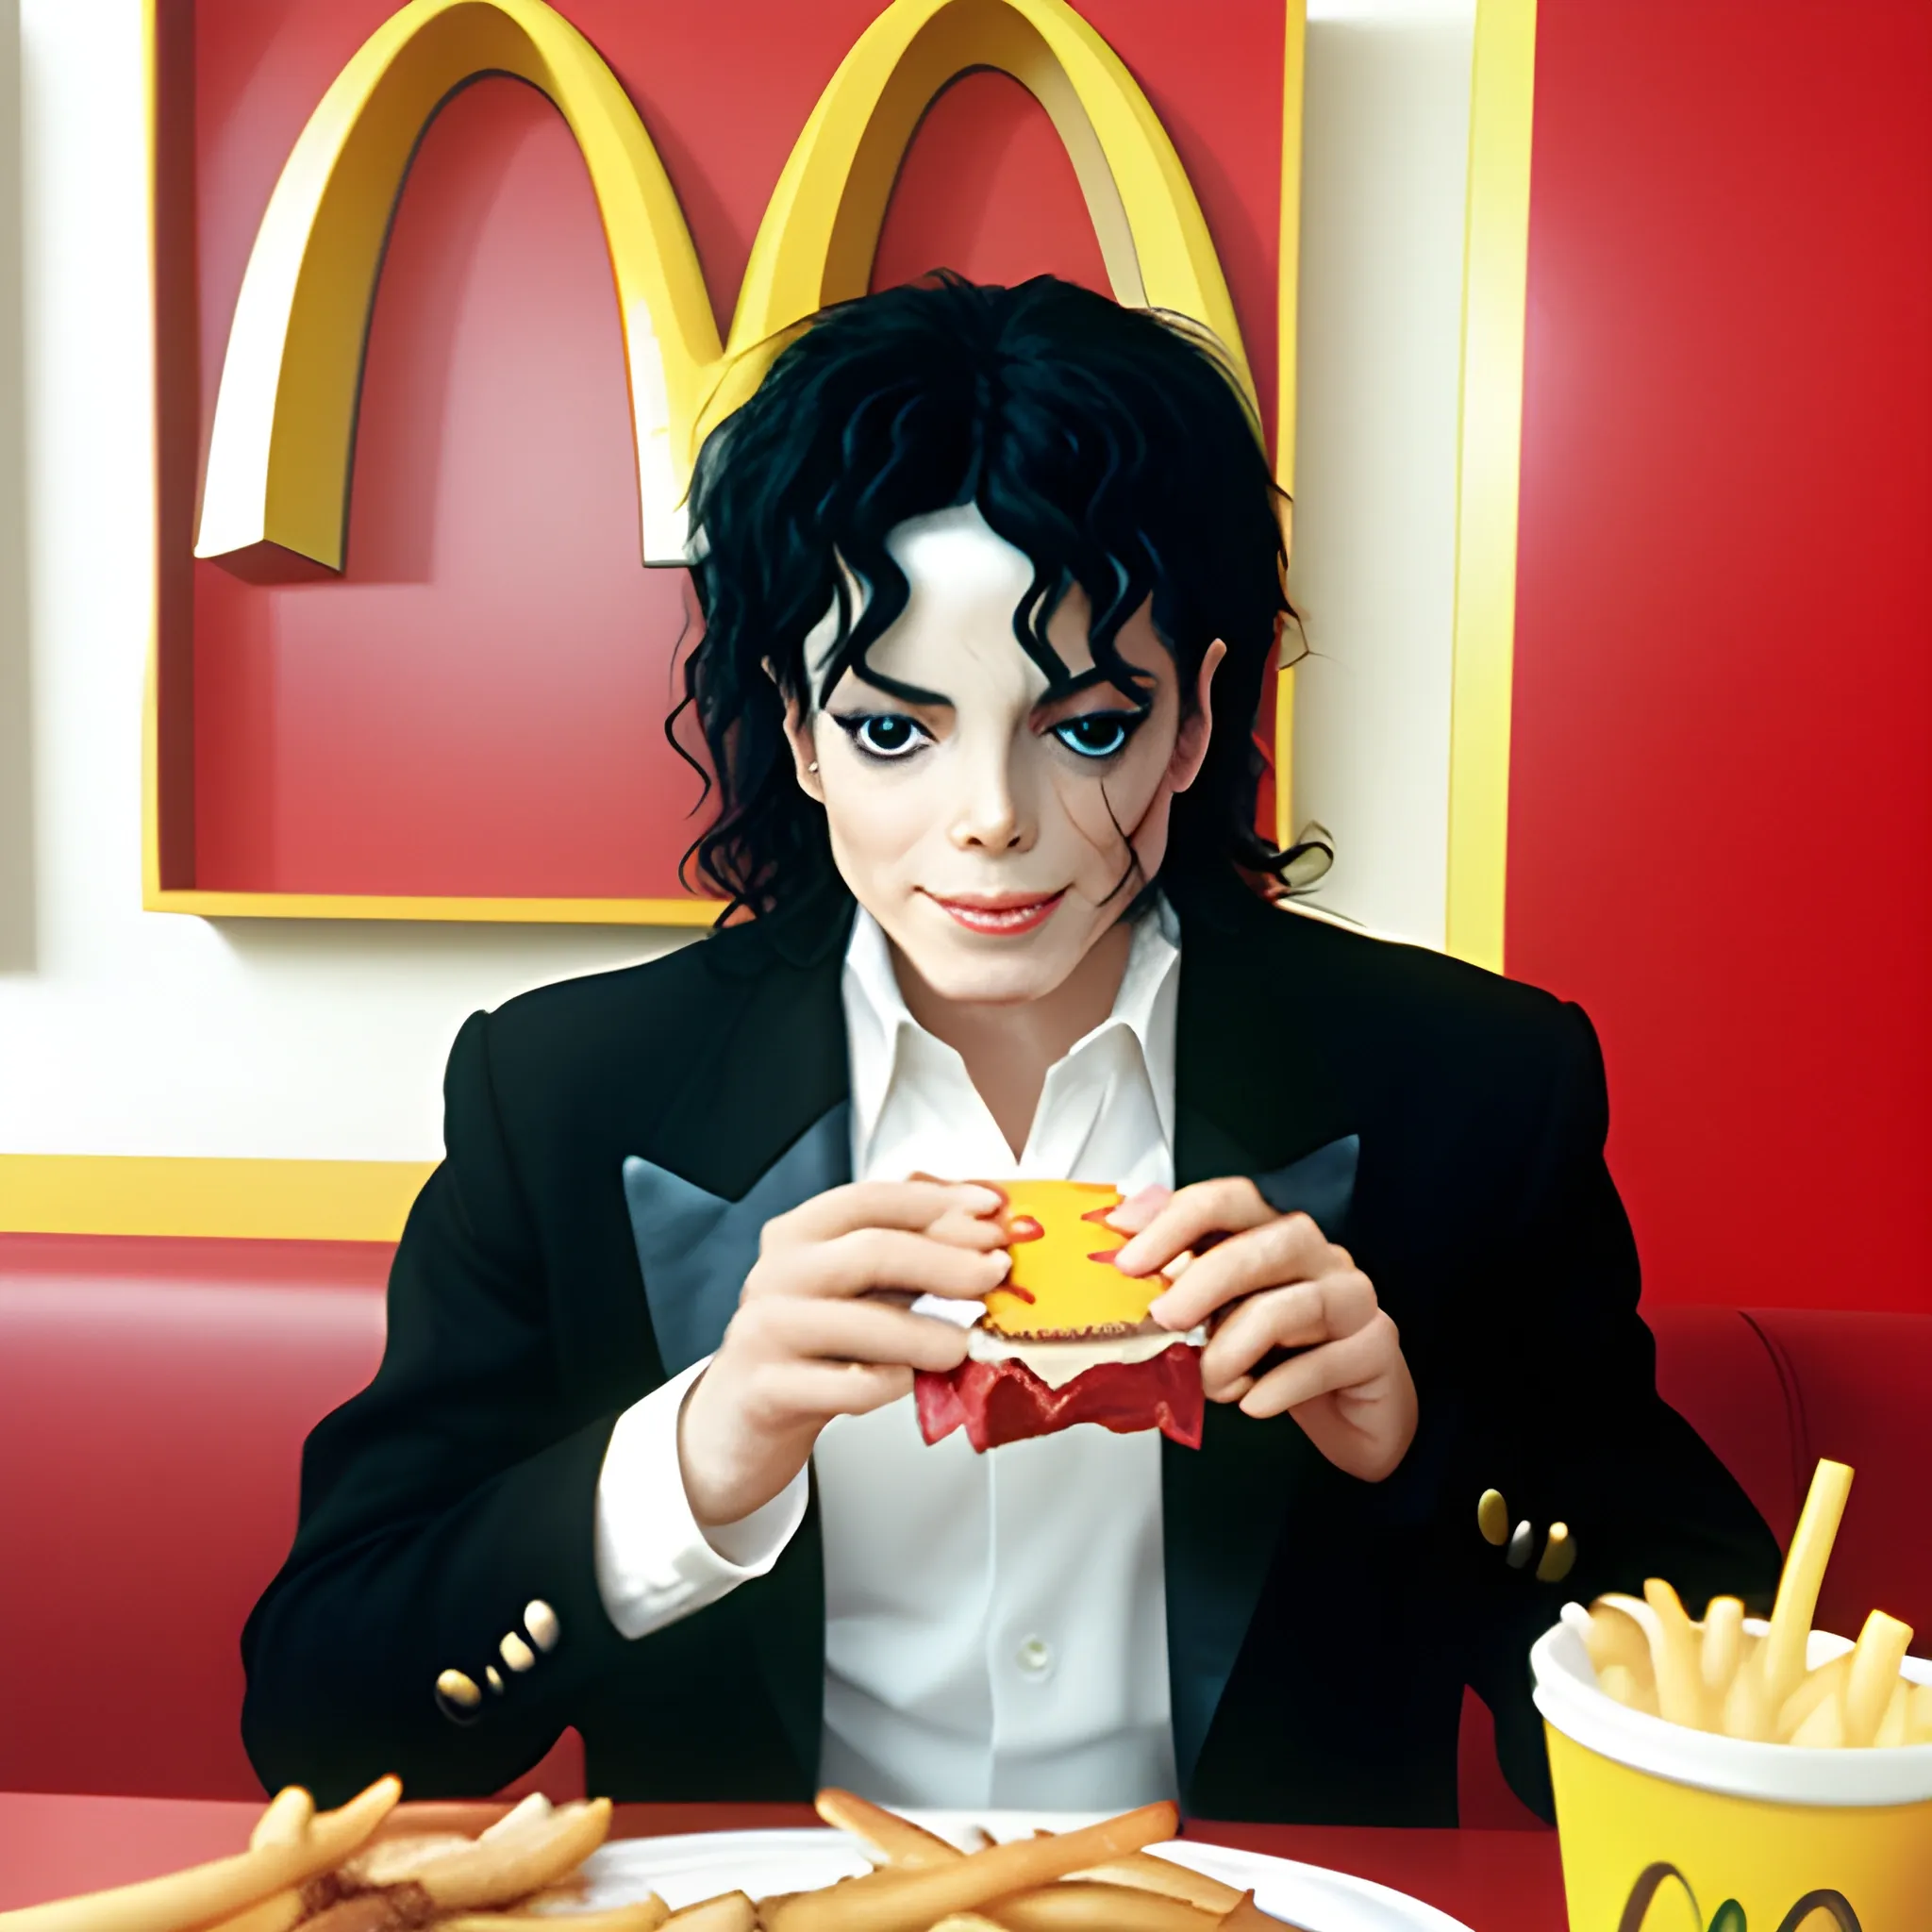 Michael Jackson eating McDonald's